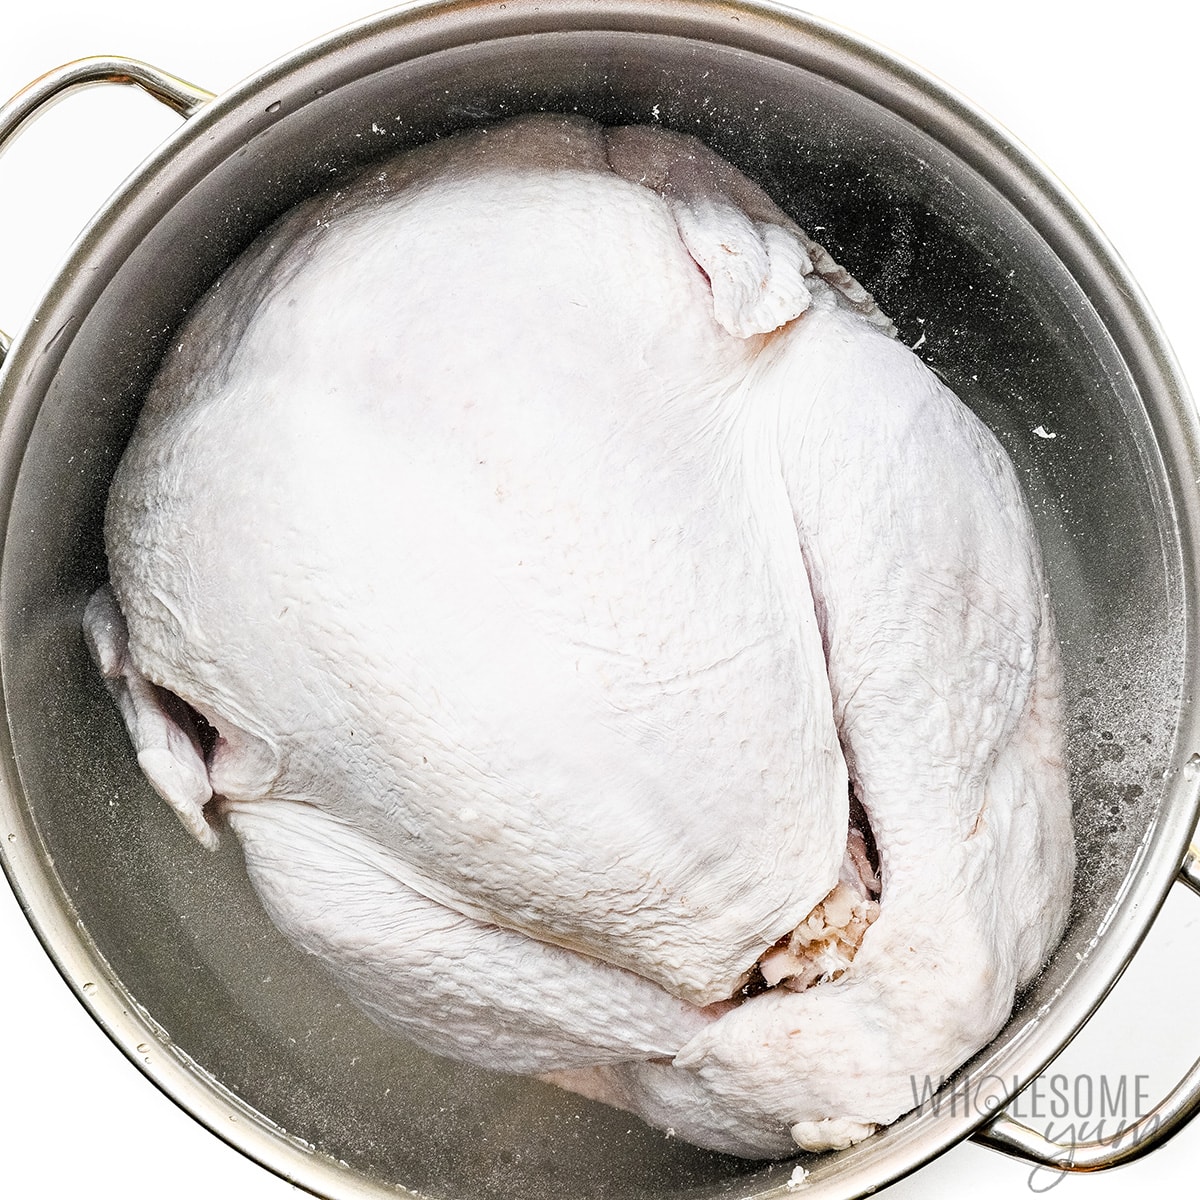 Turkey brining in a pot.